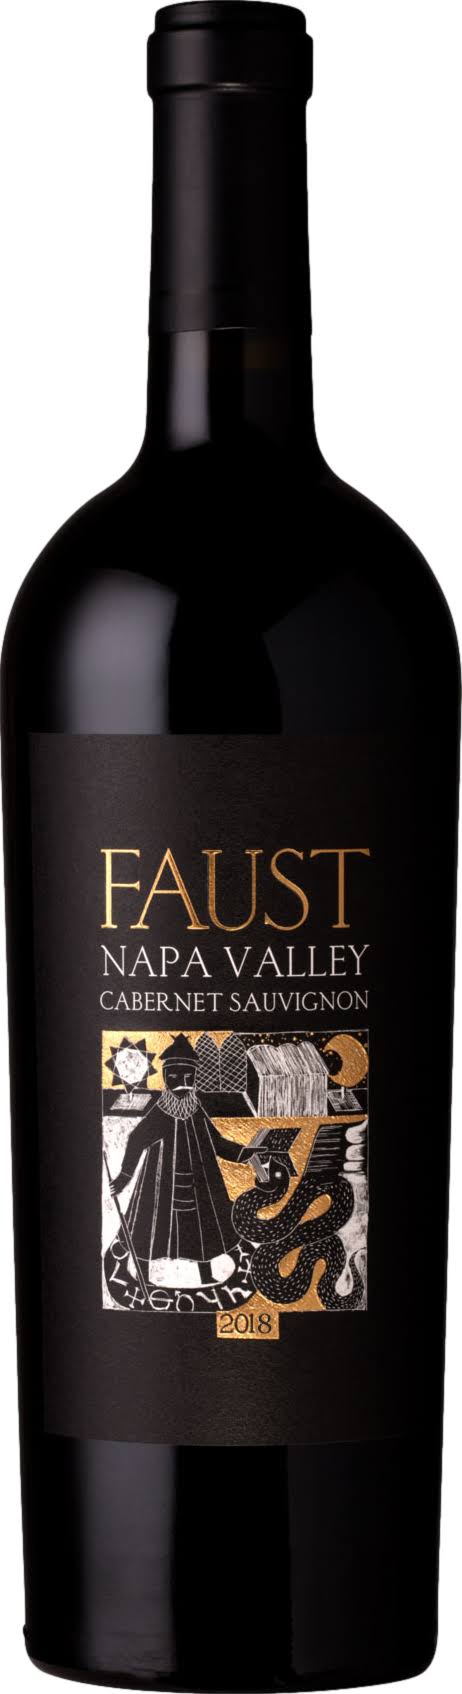 Faust Cabernet Sauvignon - Napa Valley